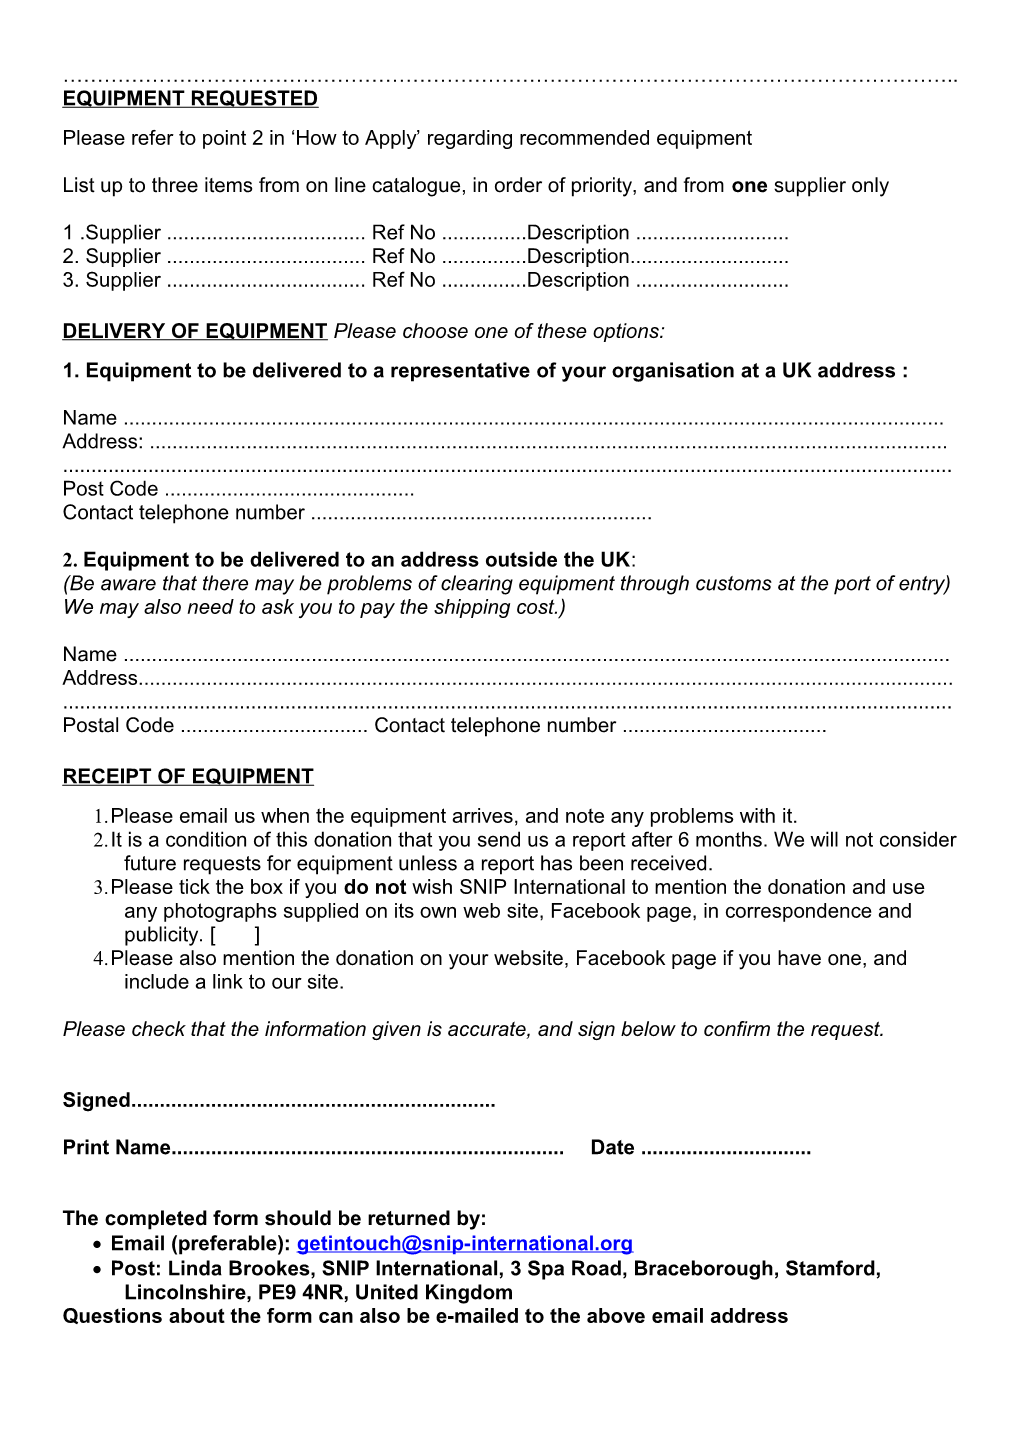 Application Form for Tnr Equipment